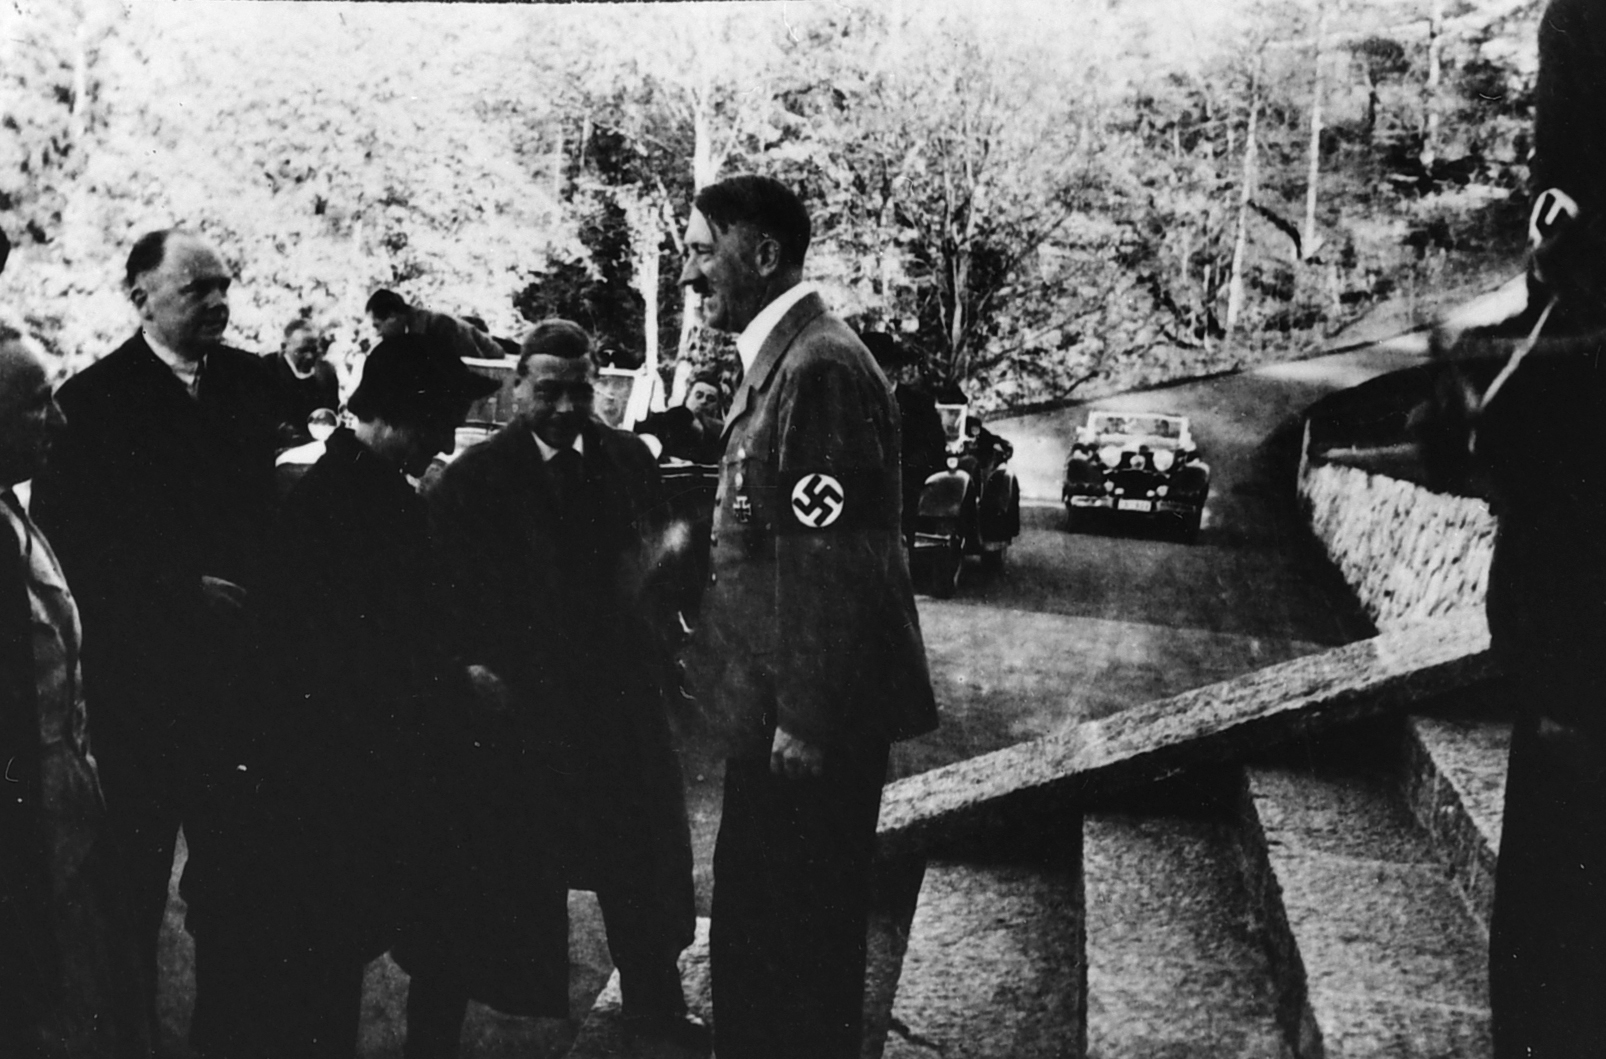 Adolf Hitler welcomes the Duke and Duchess of Windsor at the Berghof